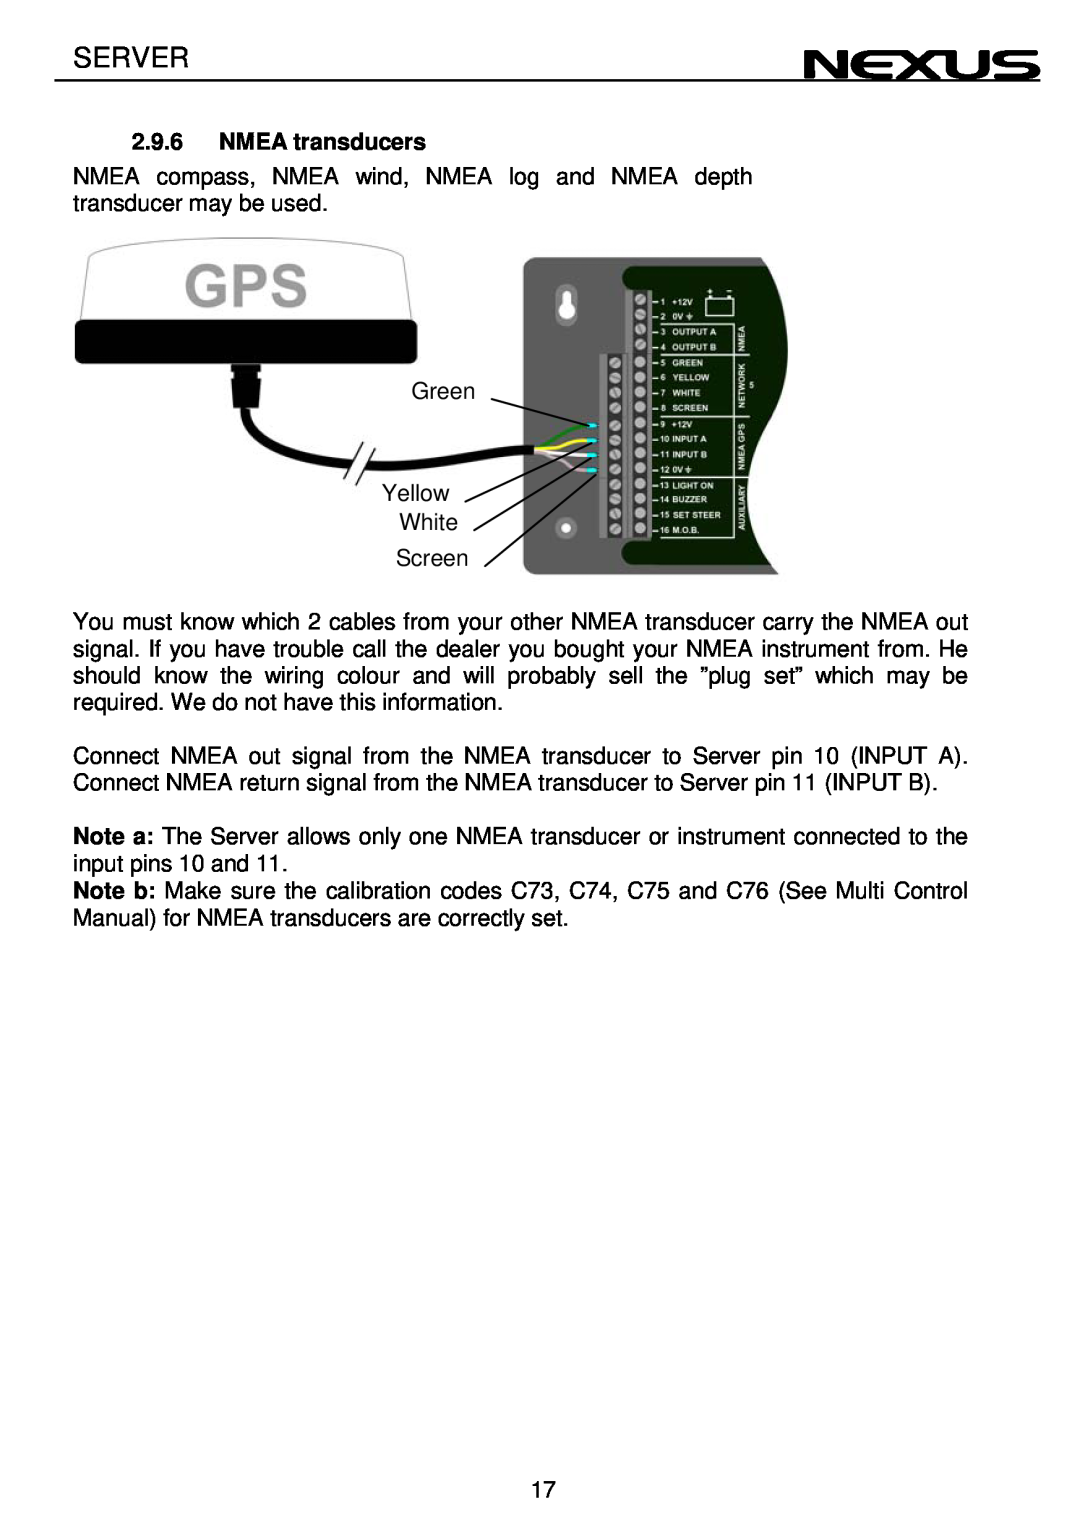 Nexus 21 NX2 operation manual Server, NMEA transducers 